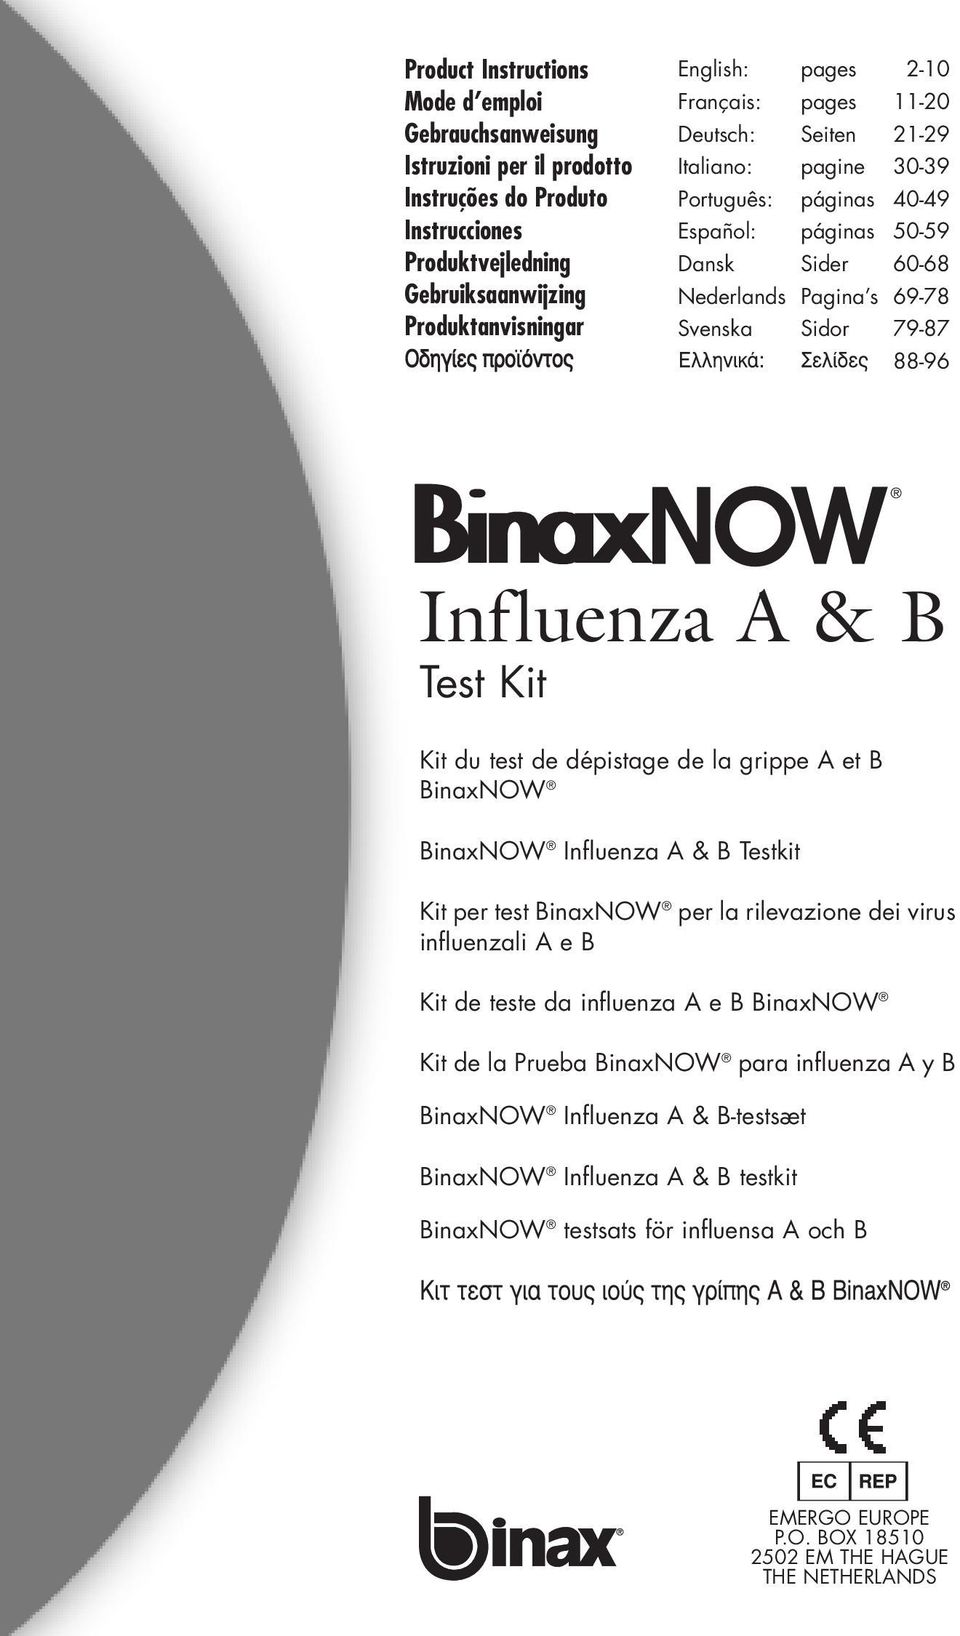 B Test Kit Kit du test de dépistage de la grippe A et B BinaxNOW BinaxNOW Influenza A & B Testkit Kit per test BinaxNOW per la rilevazione dei virus influenzali A e B Kit de teste da influenza A e B